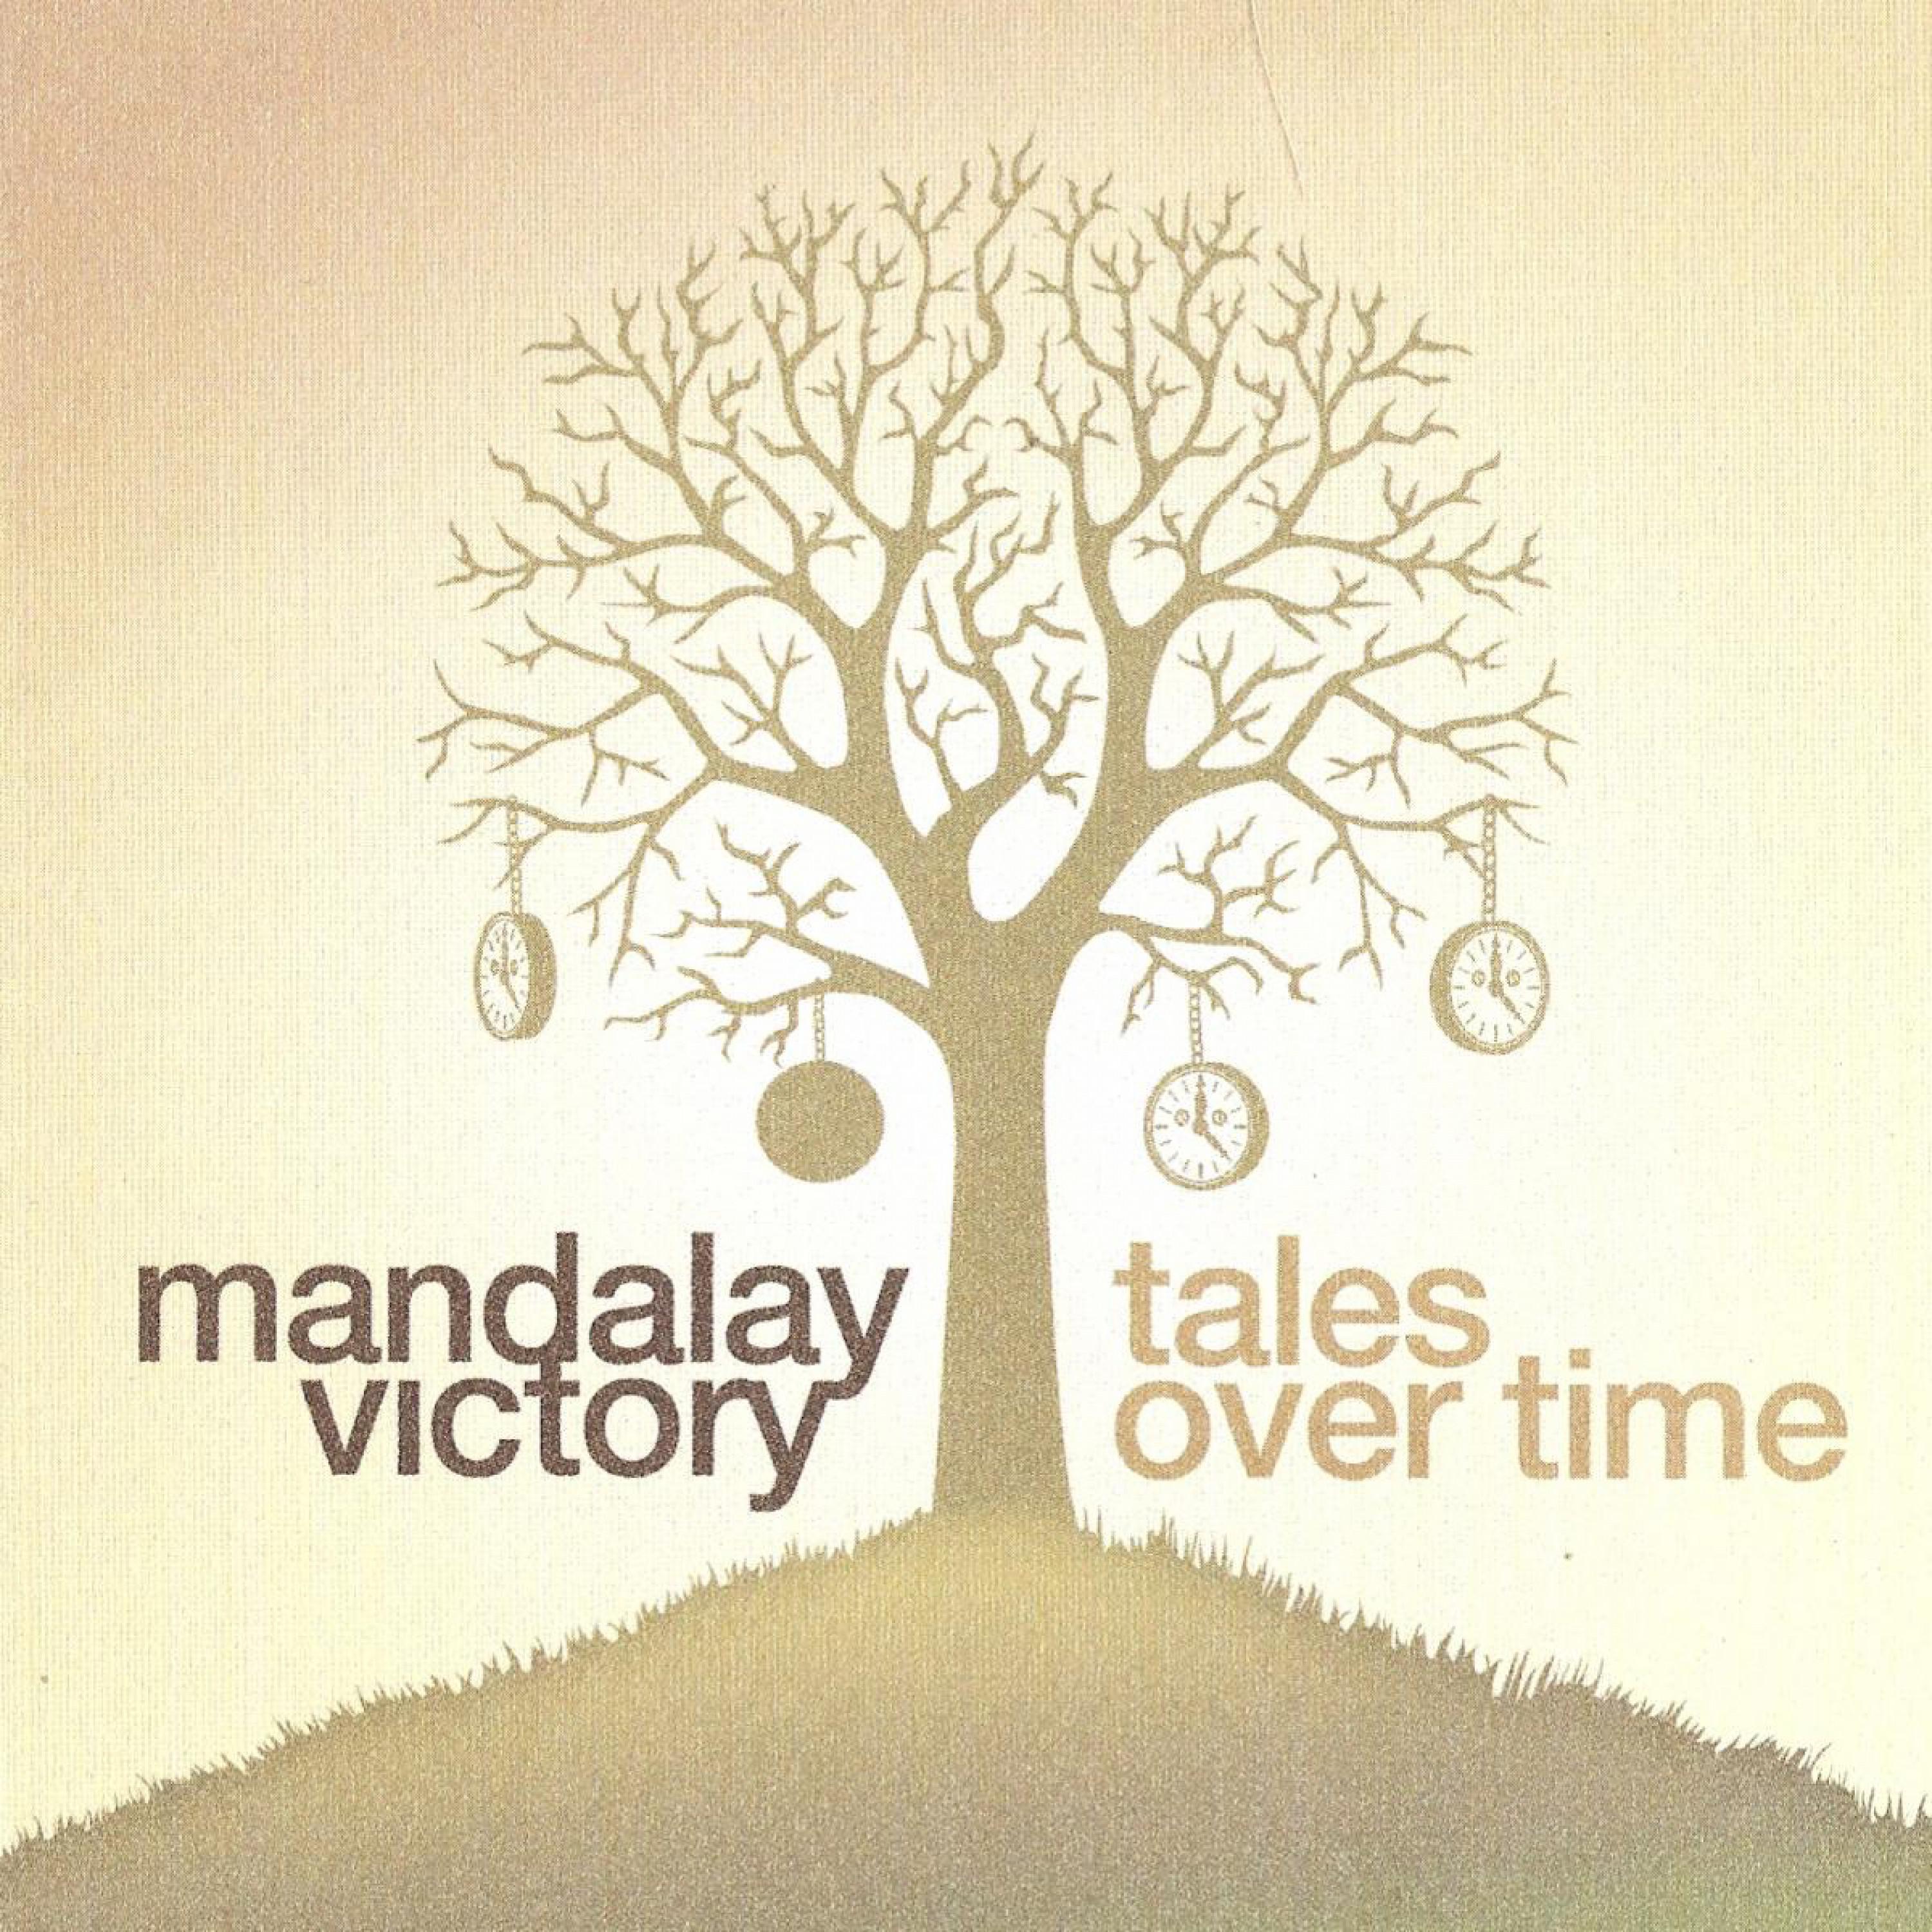 Mandalay Victory - Introduction